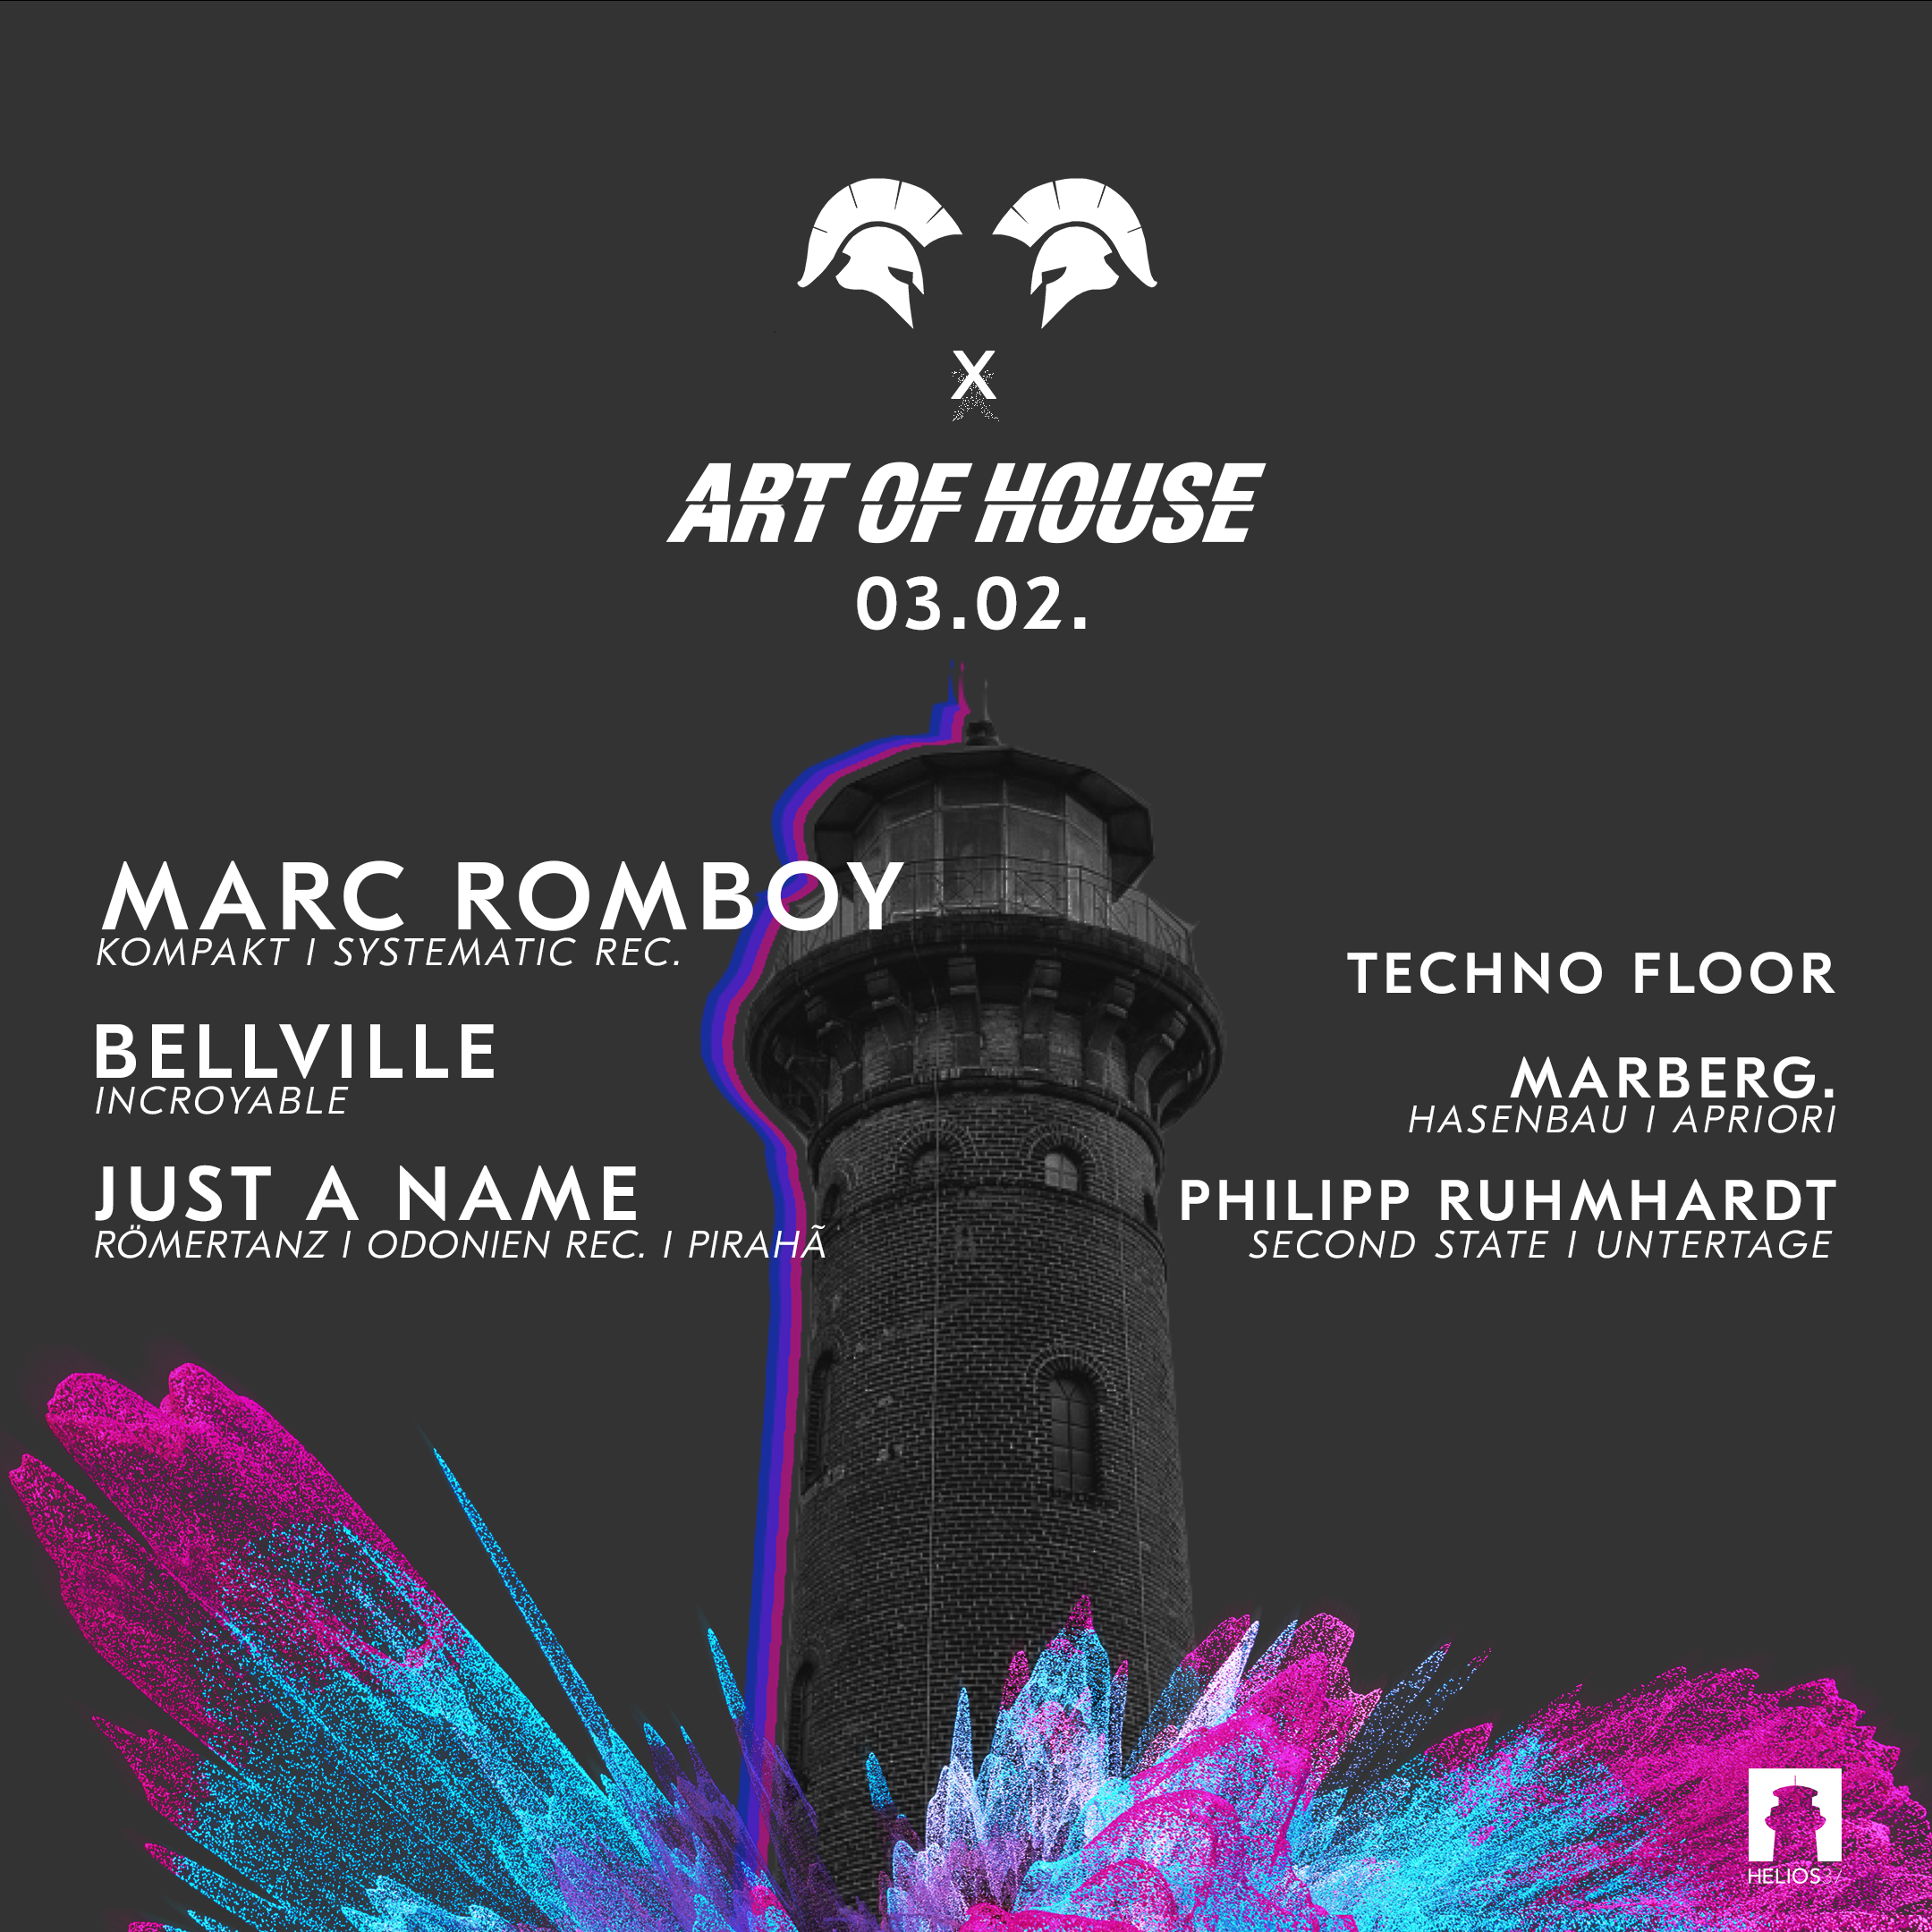 Art of house X Römertanz with Marc Romboy (Kompakt / Systematic) - フライヤー表